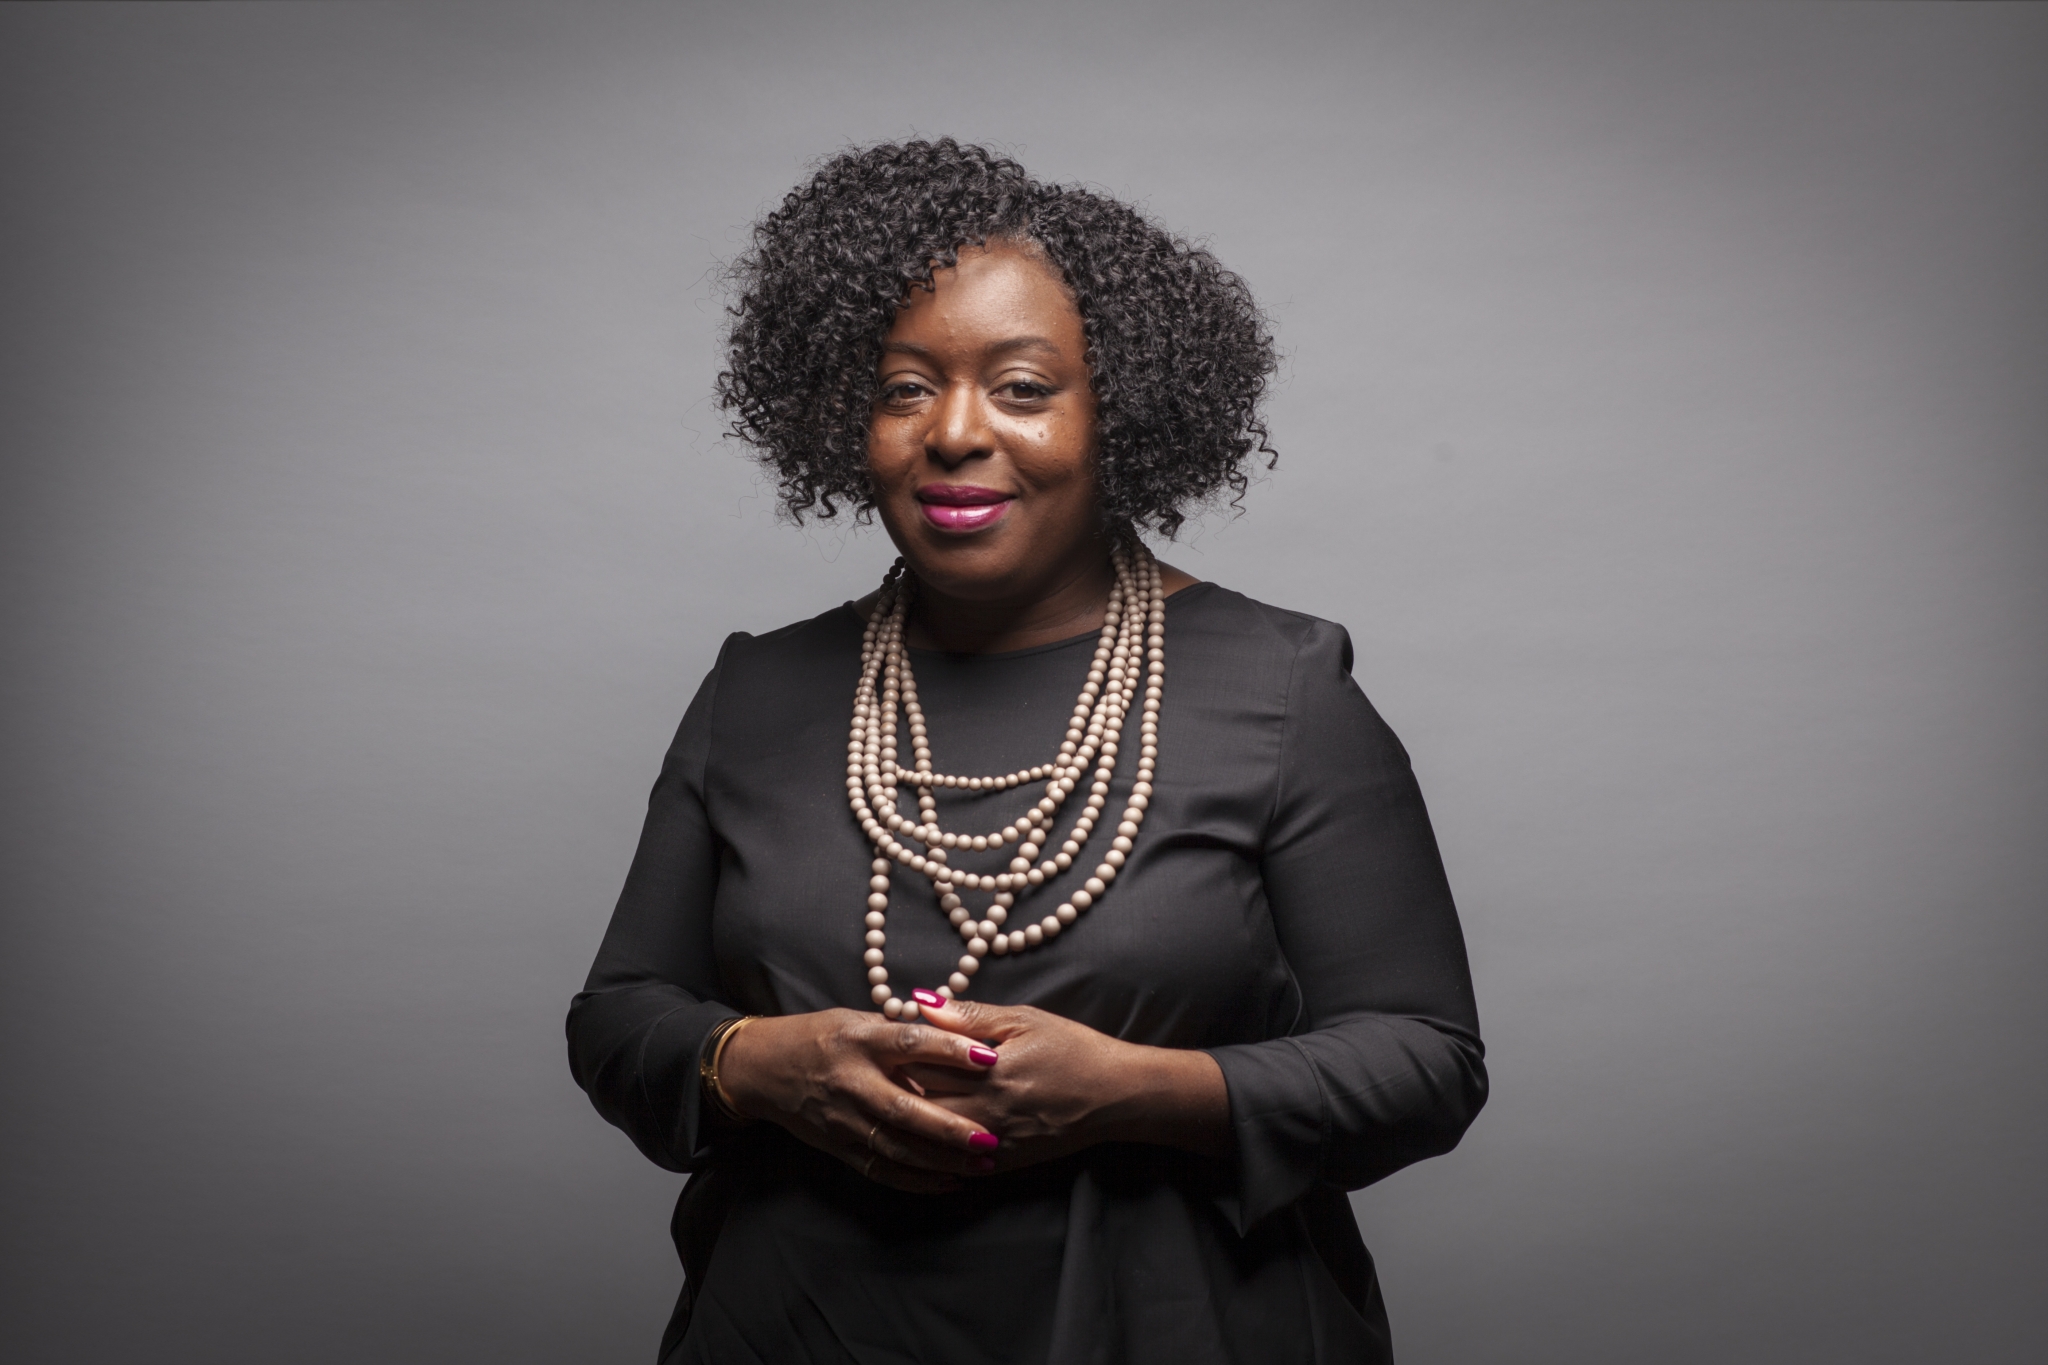 Kimberly Bryant, Black Girls Code founder, opens doors in tech